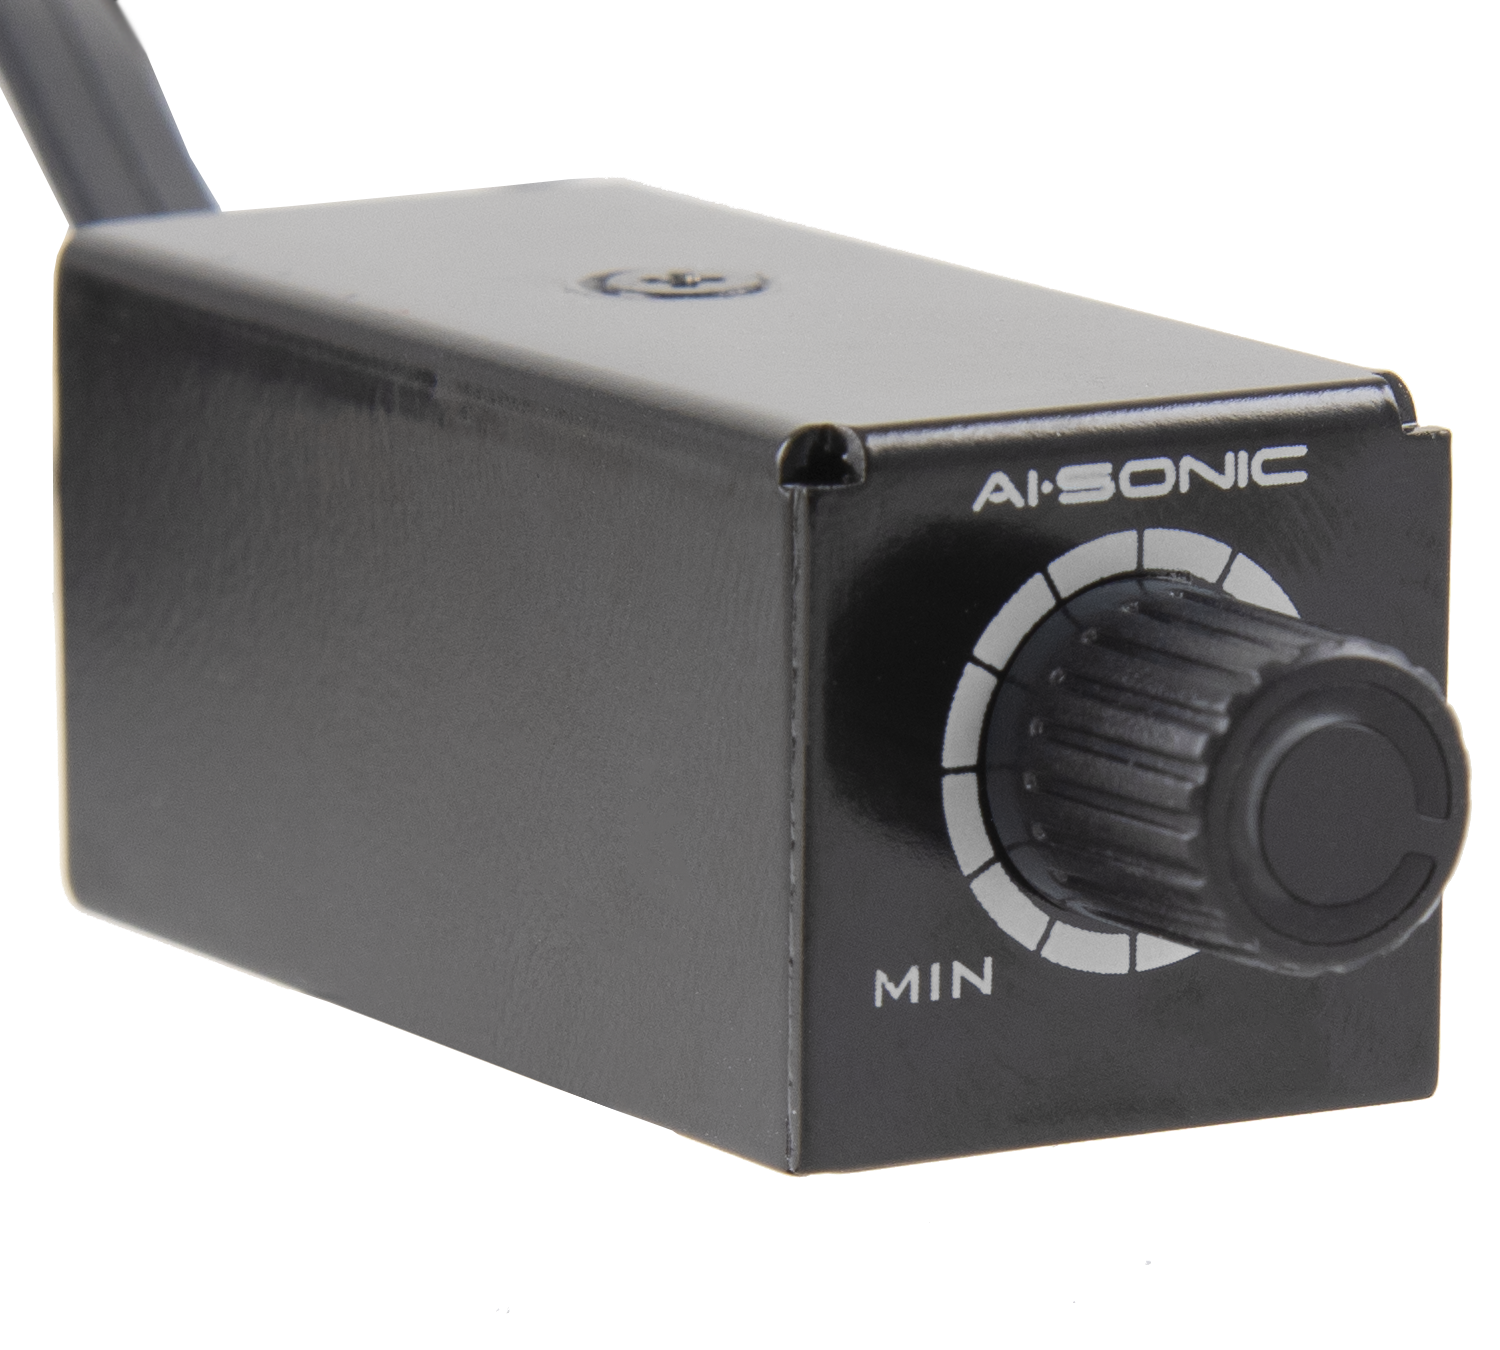 AI-SONIC bass remote control S2-BASS KNOB